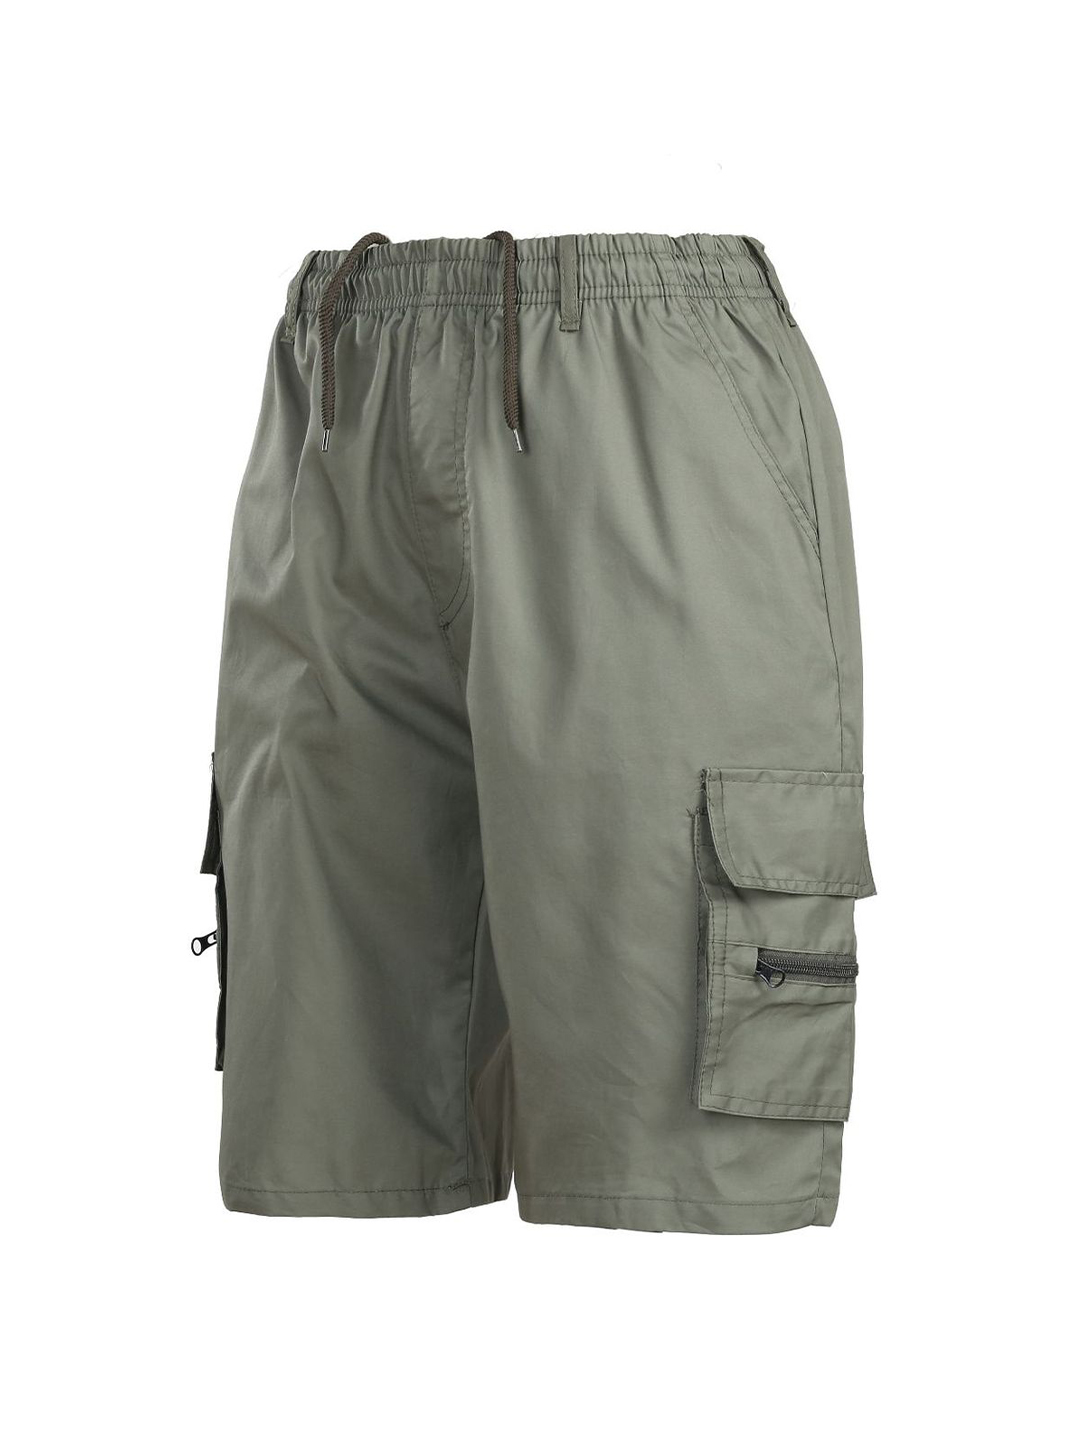 Men's Overalls Pocket Outdoor Shorts